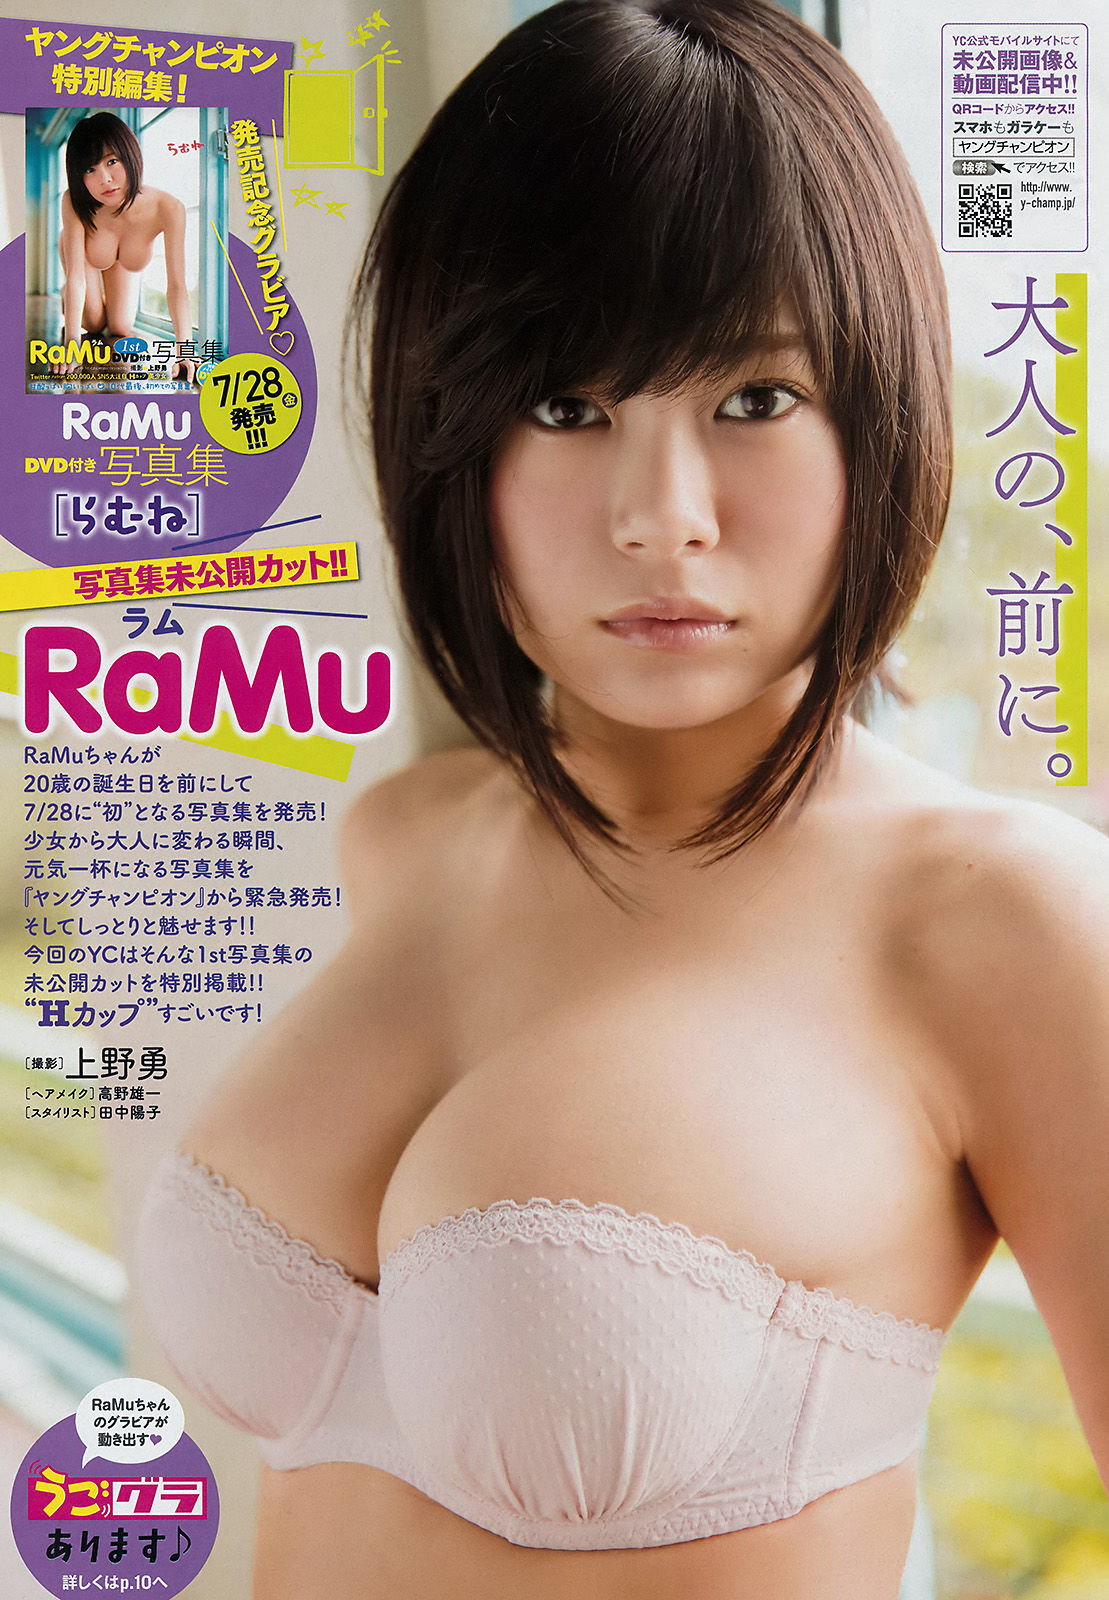 [Young Champion]大胸日本萌妹子爆乳:RaMu高品质壁纸图片珍藏版(12P)